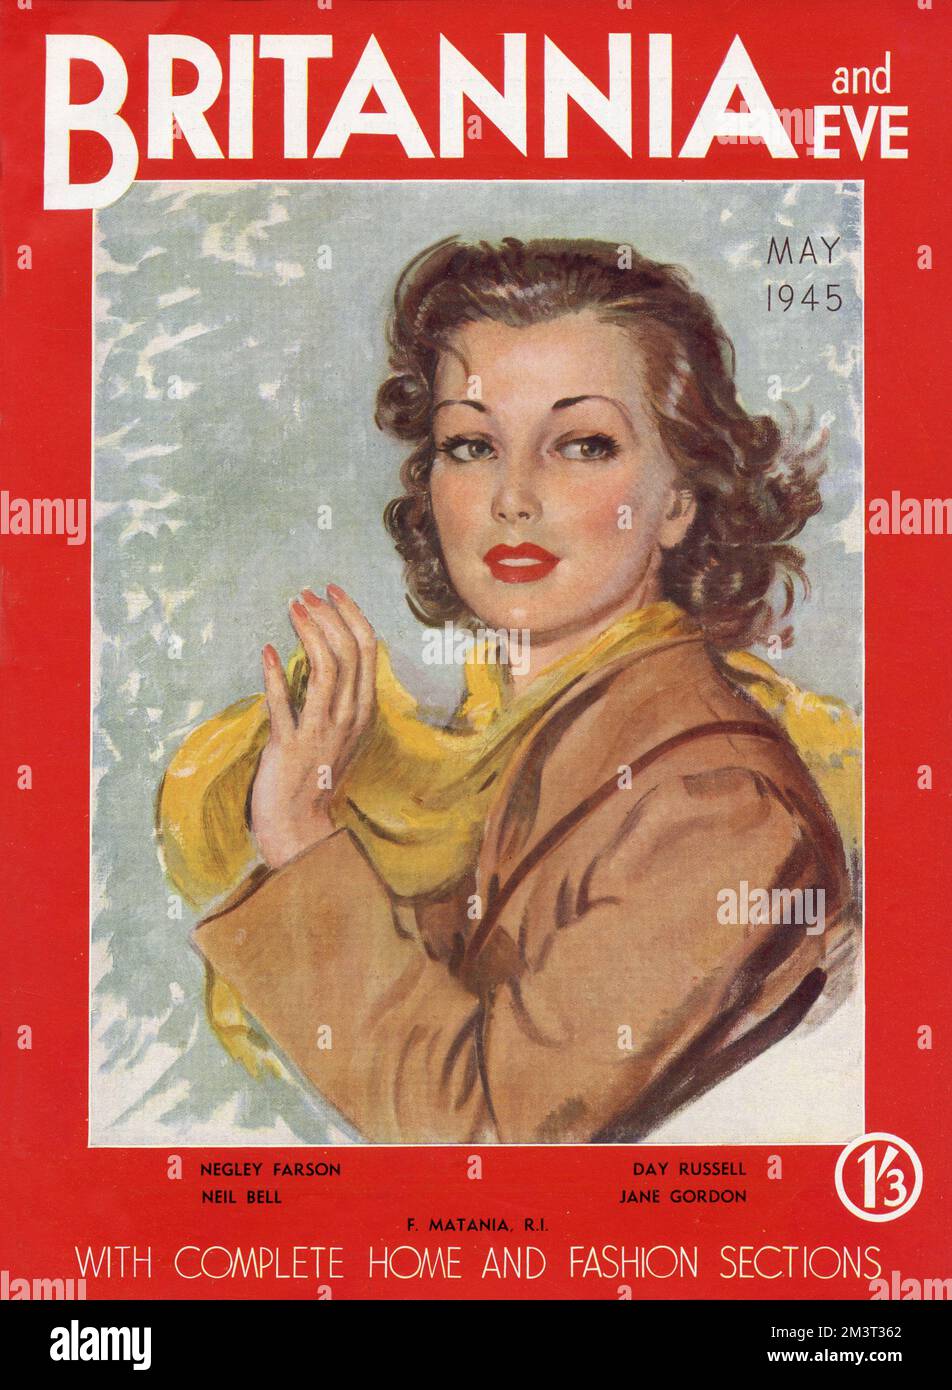 Cover of Britannia & Eve magazine, May 1945. Stock Photo